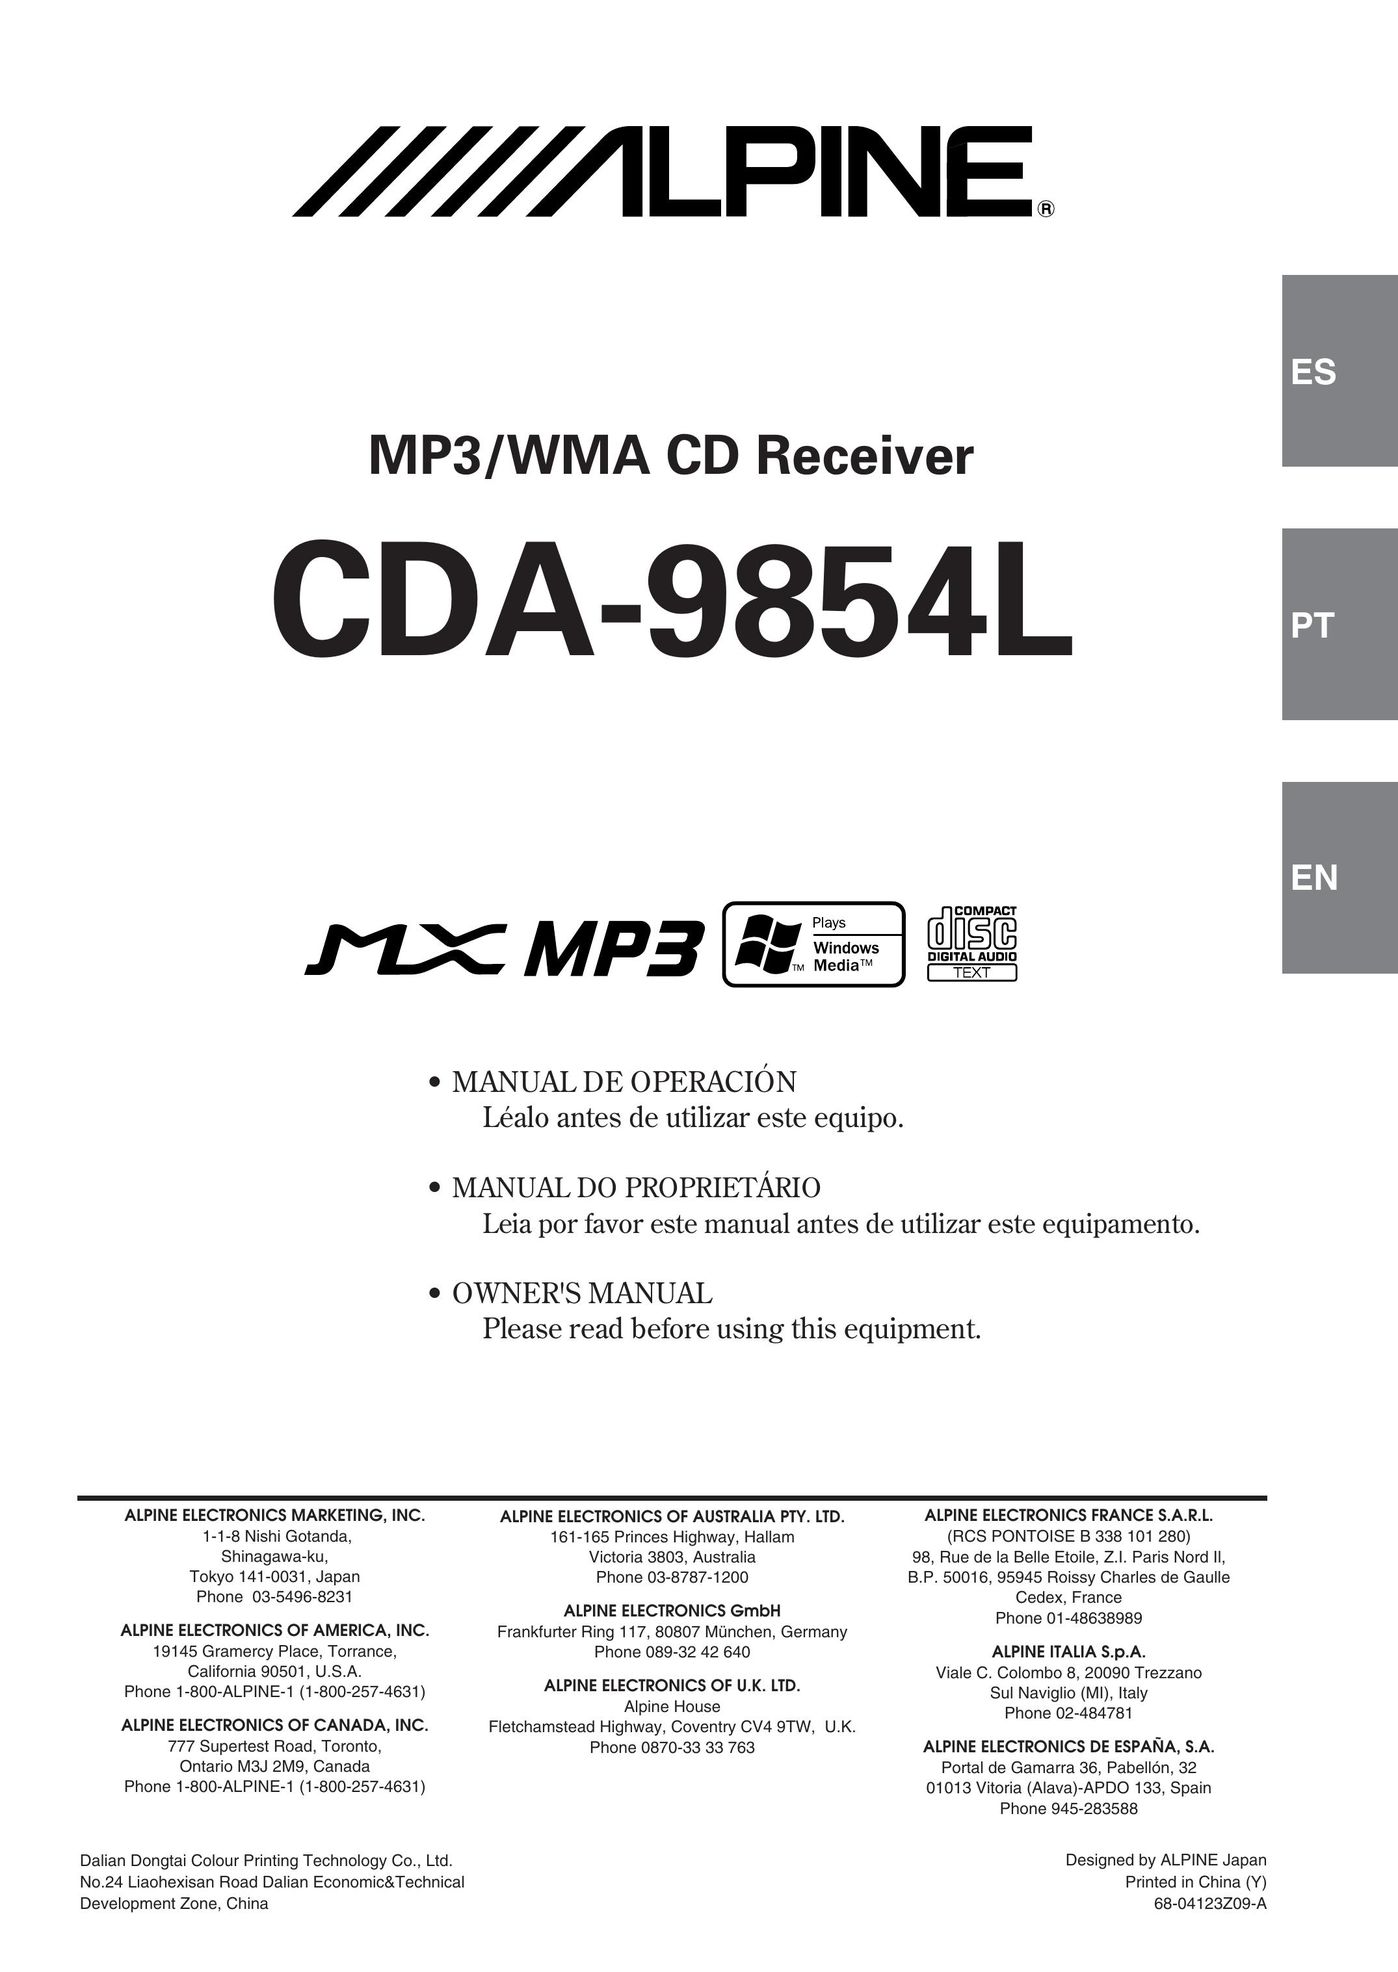 Alpine 68-04123Z09-A CD Player User Manual